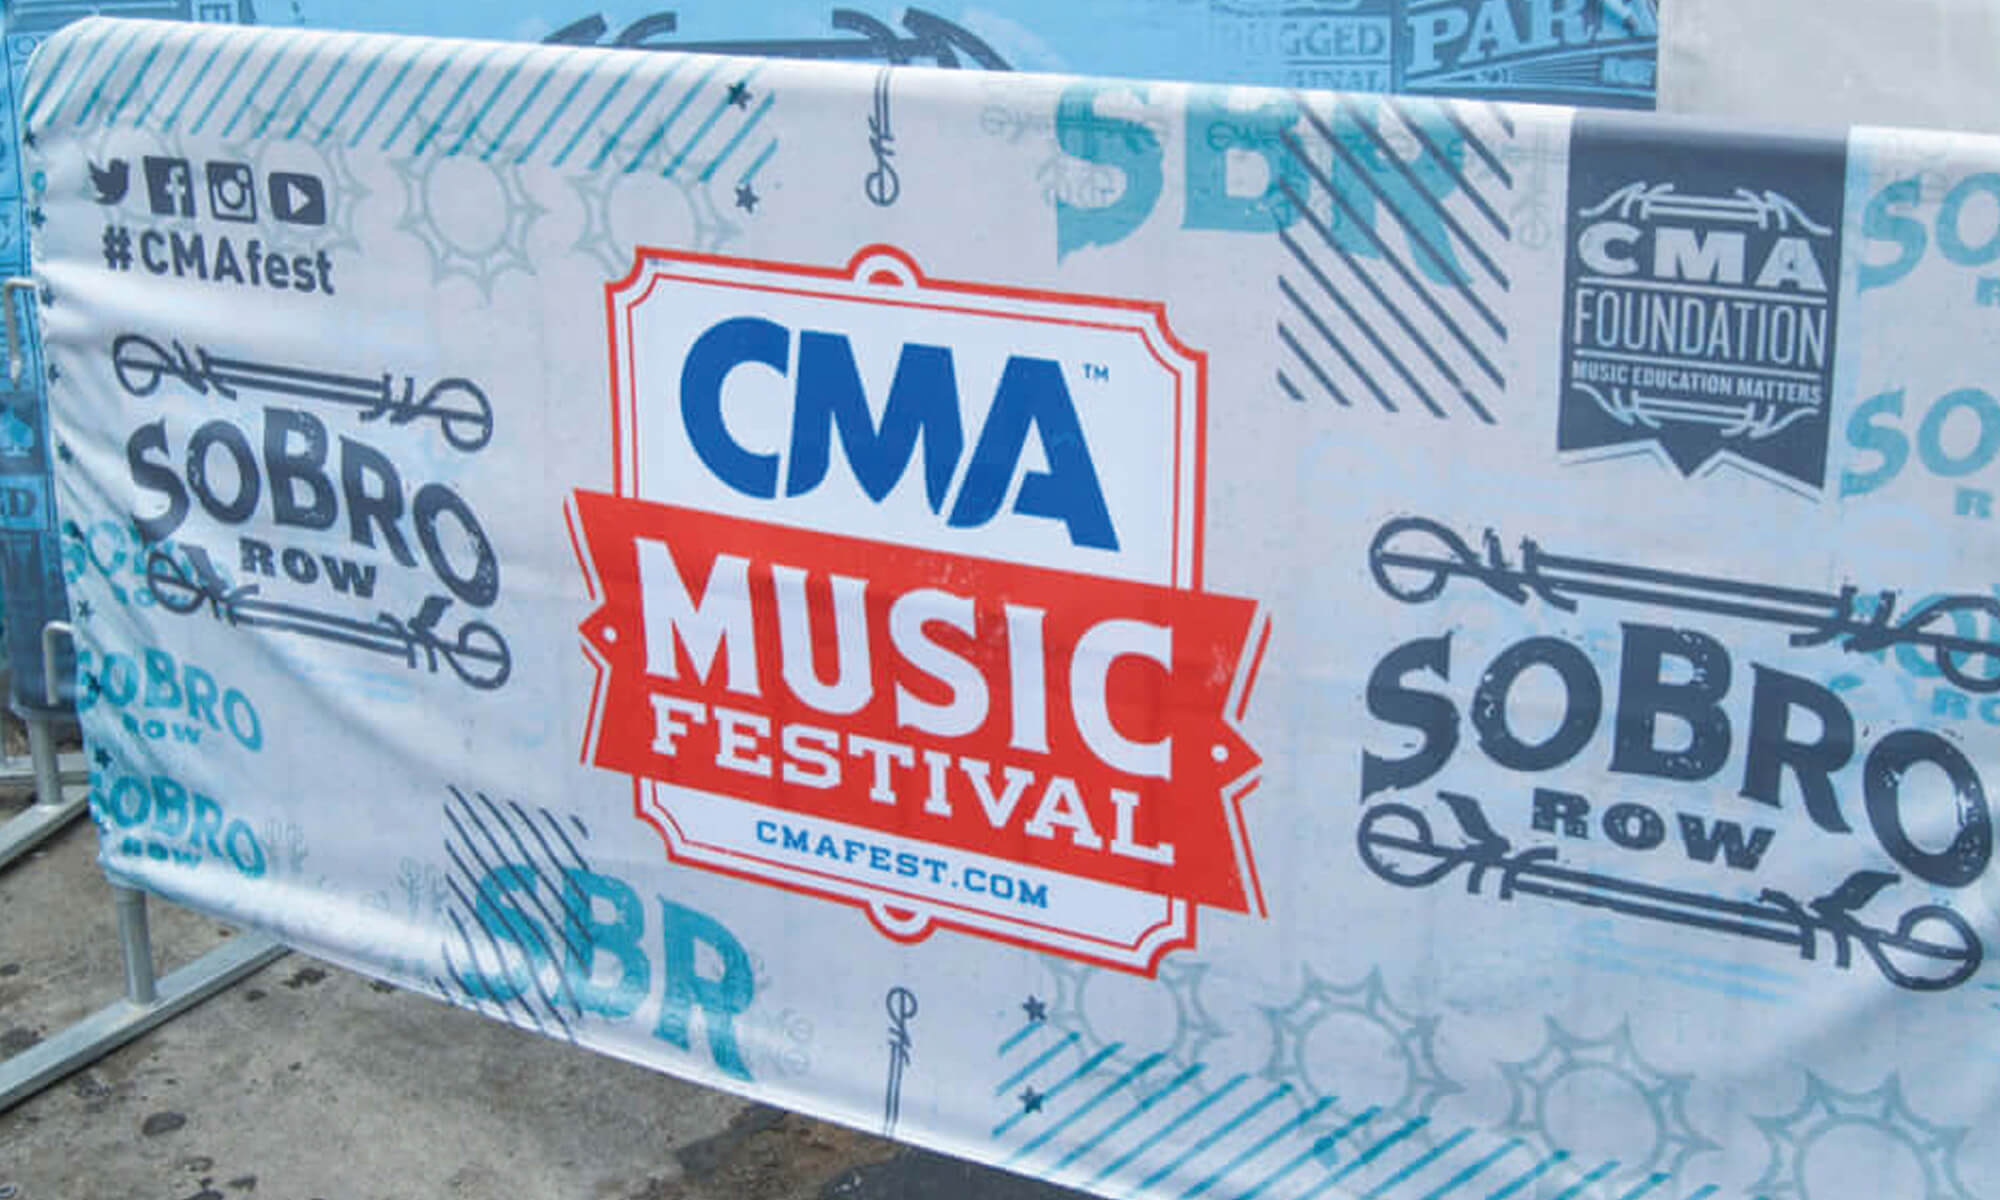 Banner Bike Wrap for SoBro Row at CMA Music Fest